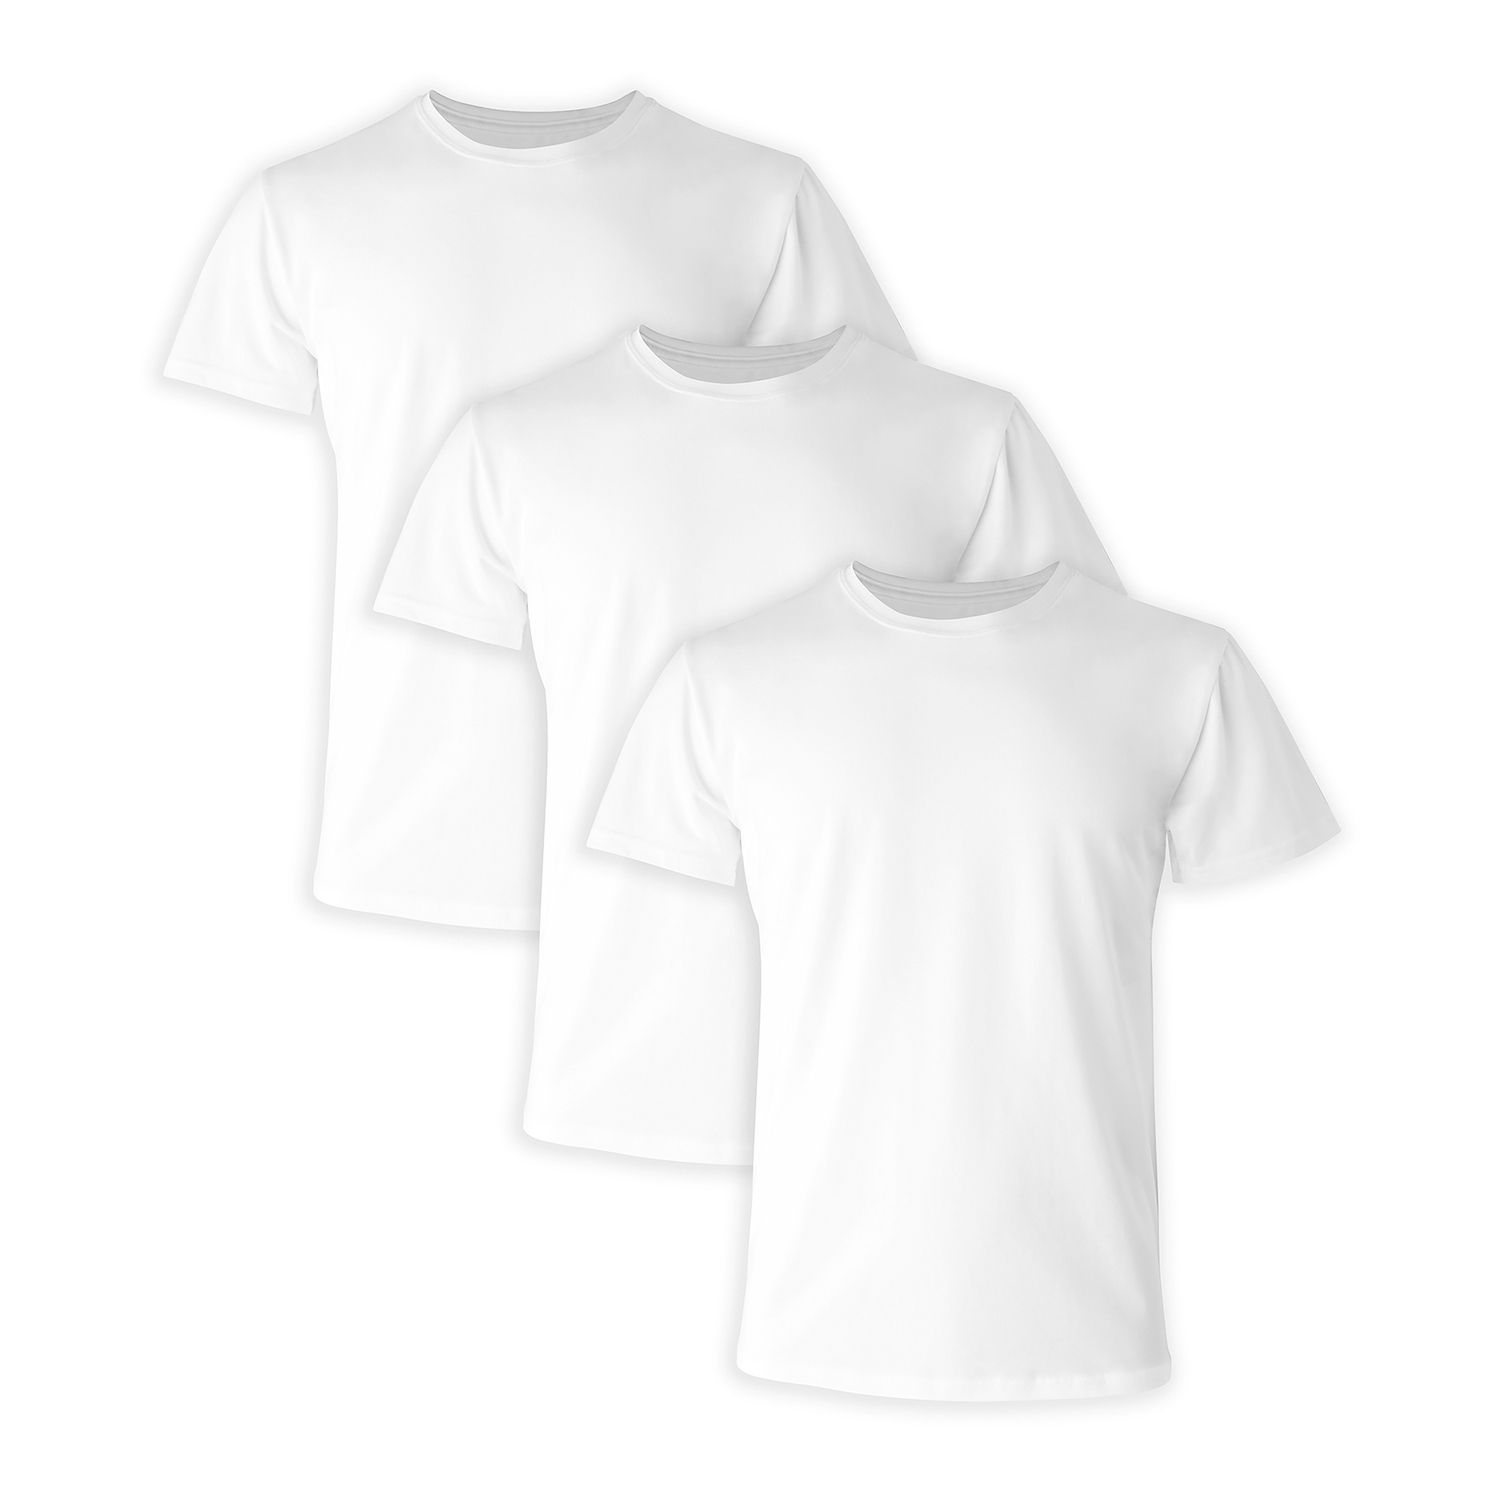 Комплект из 3 эластичных футболок-майок Big & Tall Ultimate Big Man Hanes